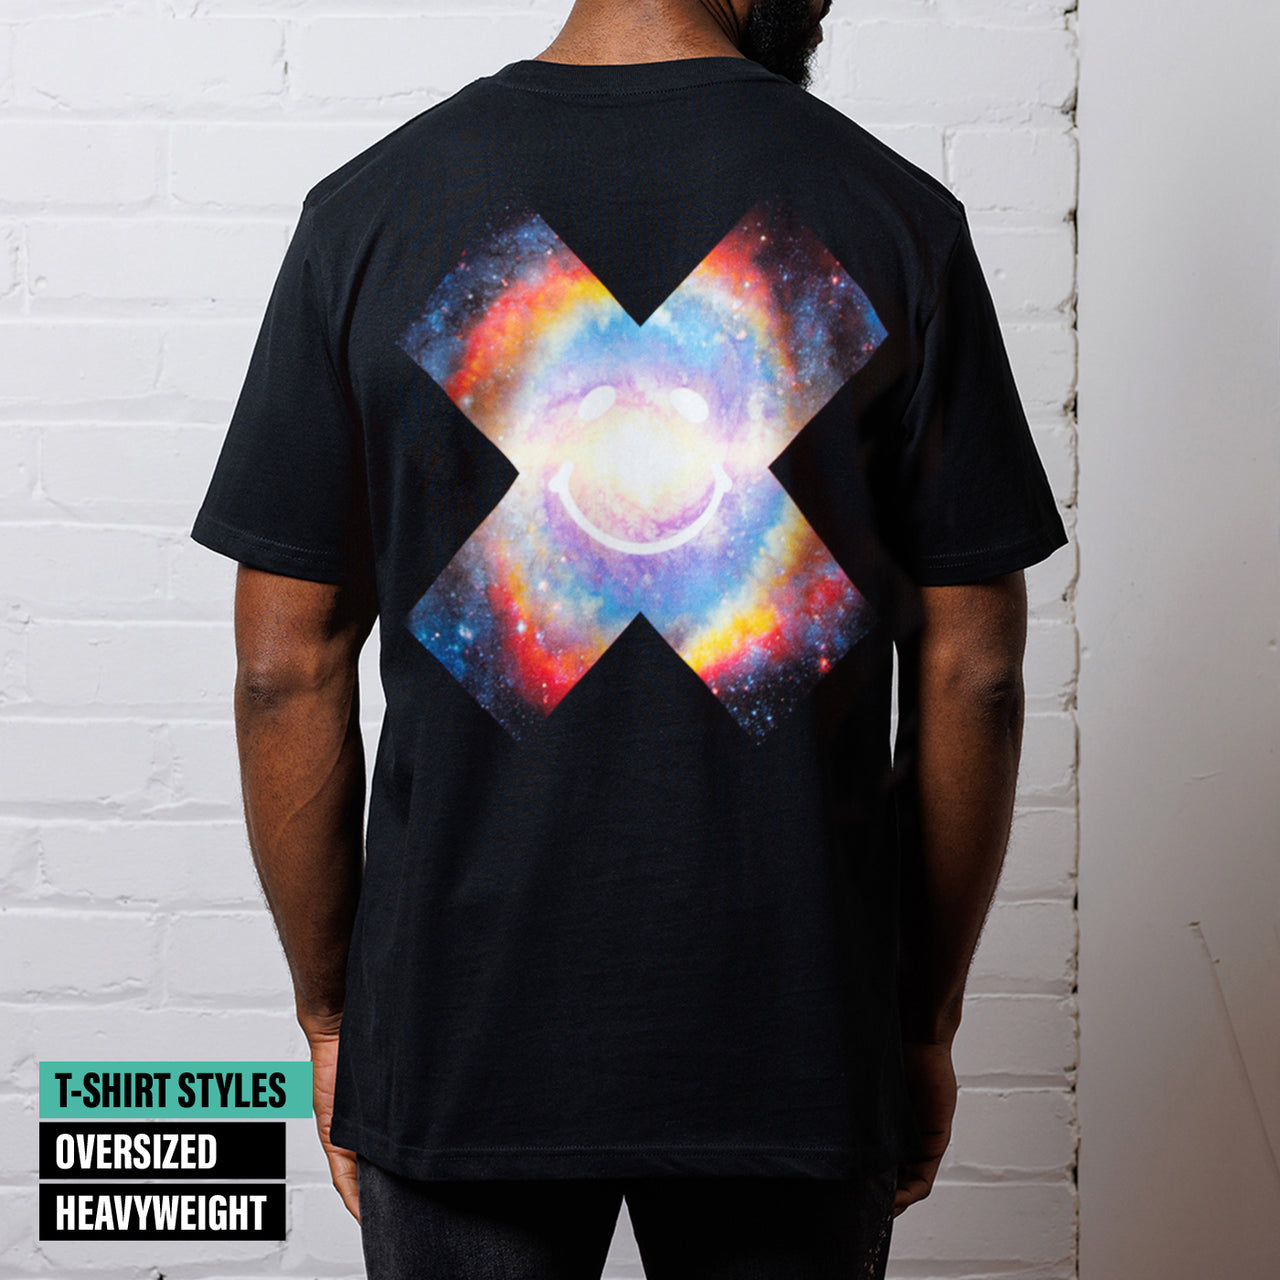 Cosmic Smiley X Imprint - Tshirt - Black